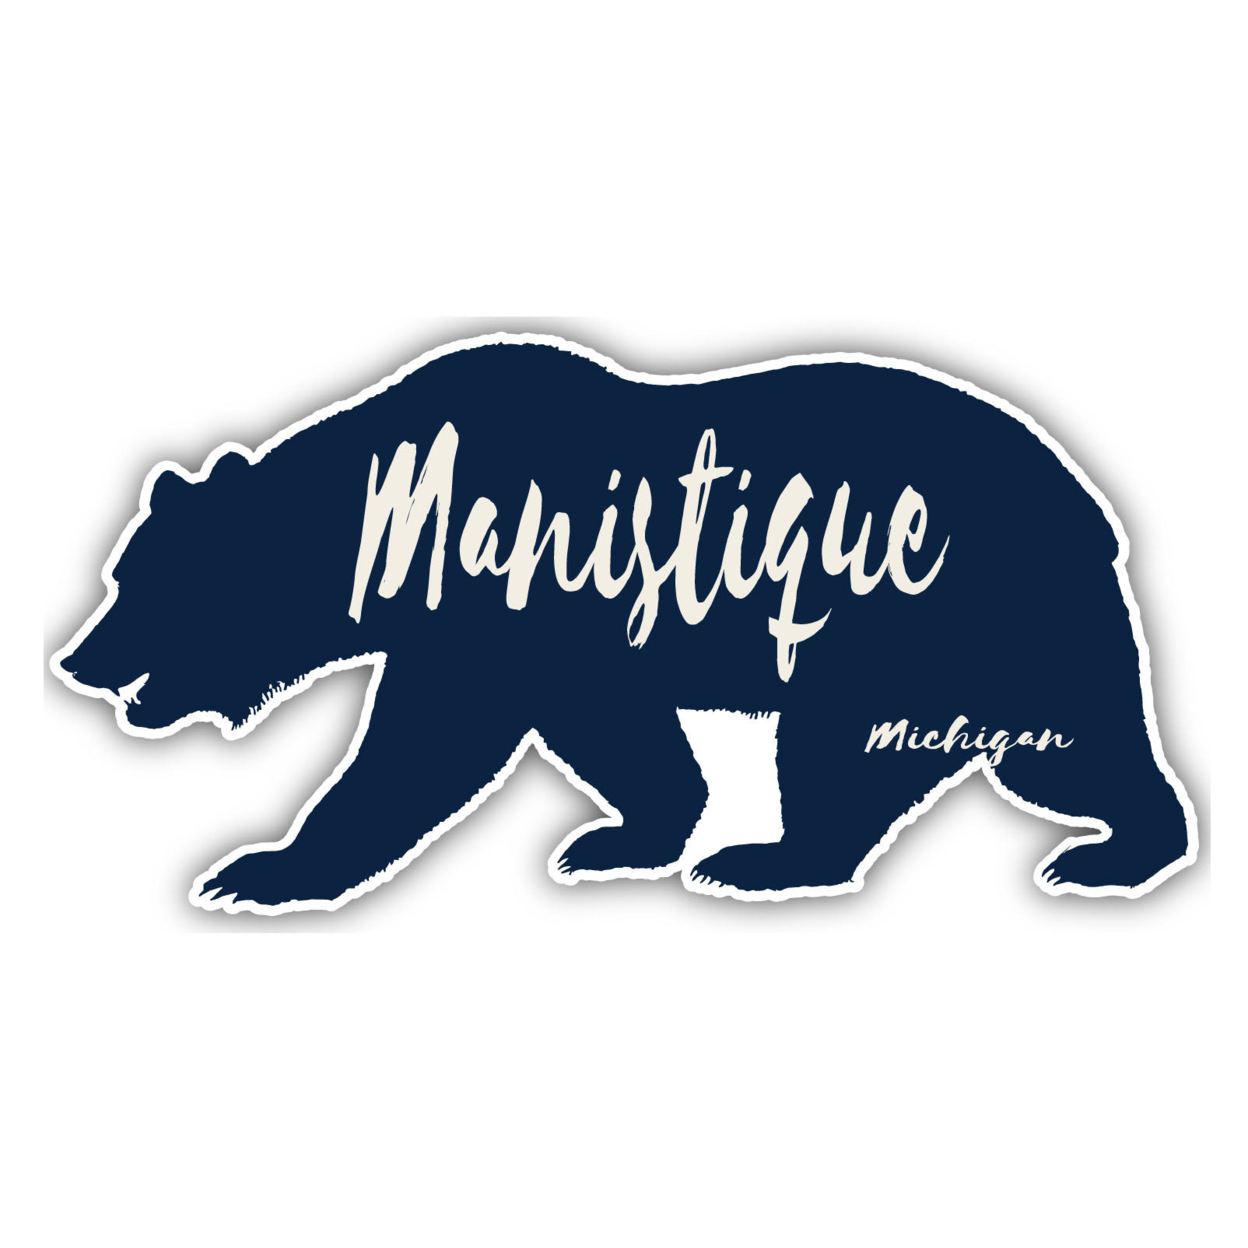 Manistique Michigan Souvenir Decorative Stickers (Choose Theme And Size) - 4-Inch, Bear